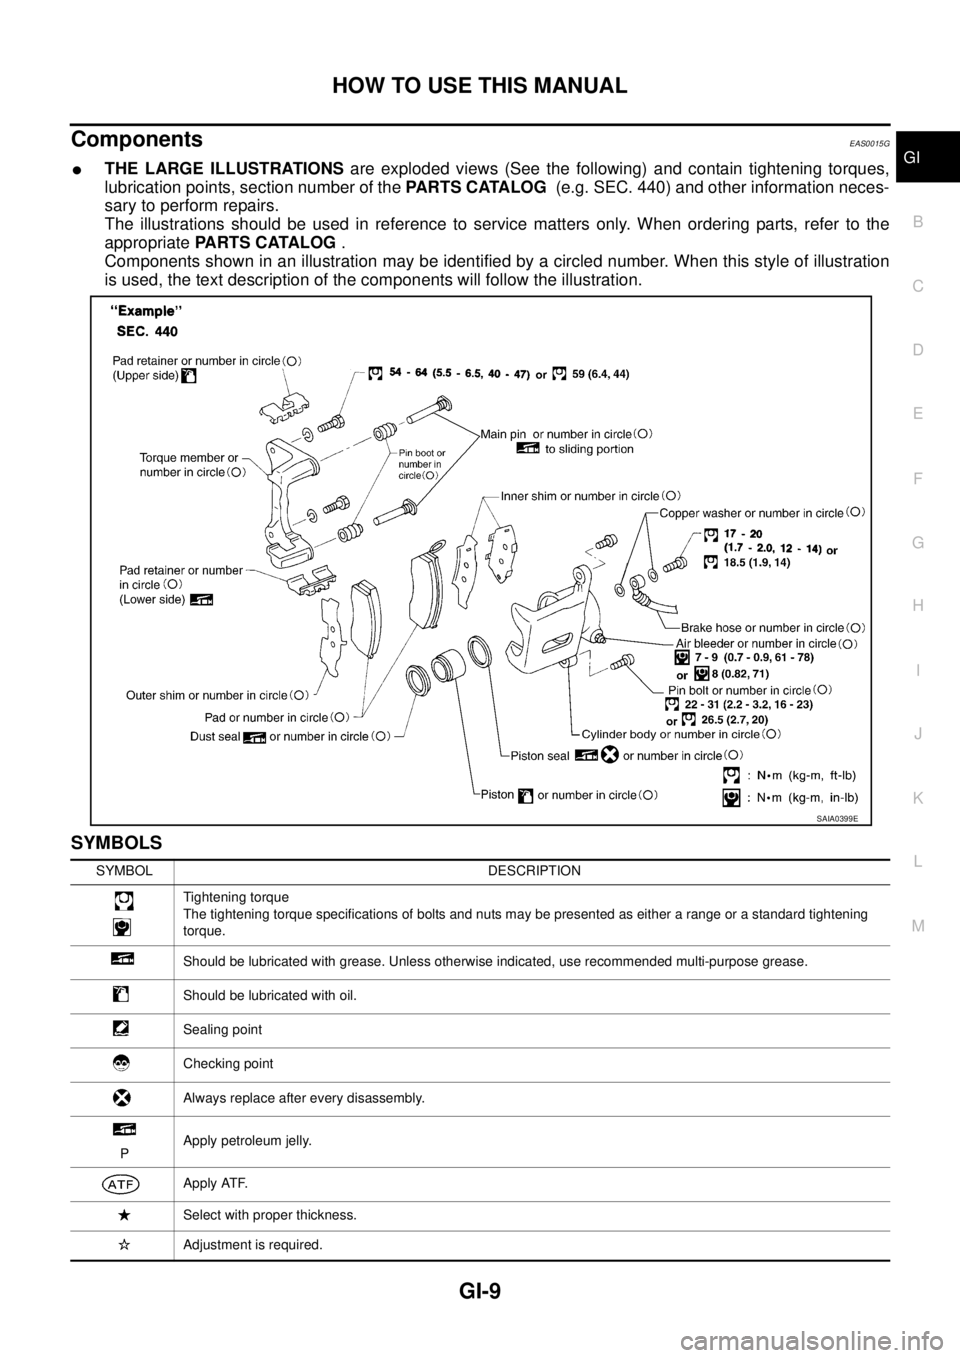 NISSAN X-TRAIL 2003  Service Repair Manual HOW TO USE THIS MANUAL
GI-9
C
D
E
F
G
H
I
J
K
L
MB
GI
 
ComponentsEAS0015G
THE LARGE ILLUSTRATIONS are exploded views (See the following) and contain tightening torques,
lubrication points, section n